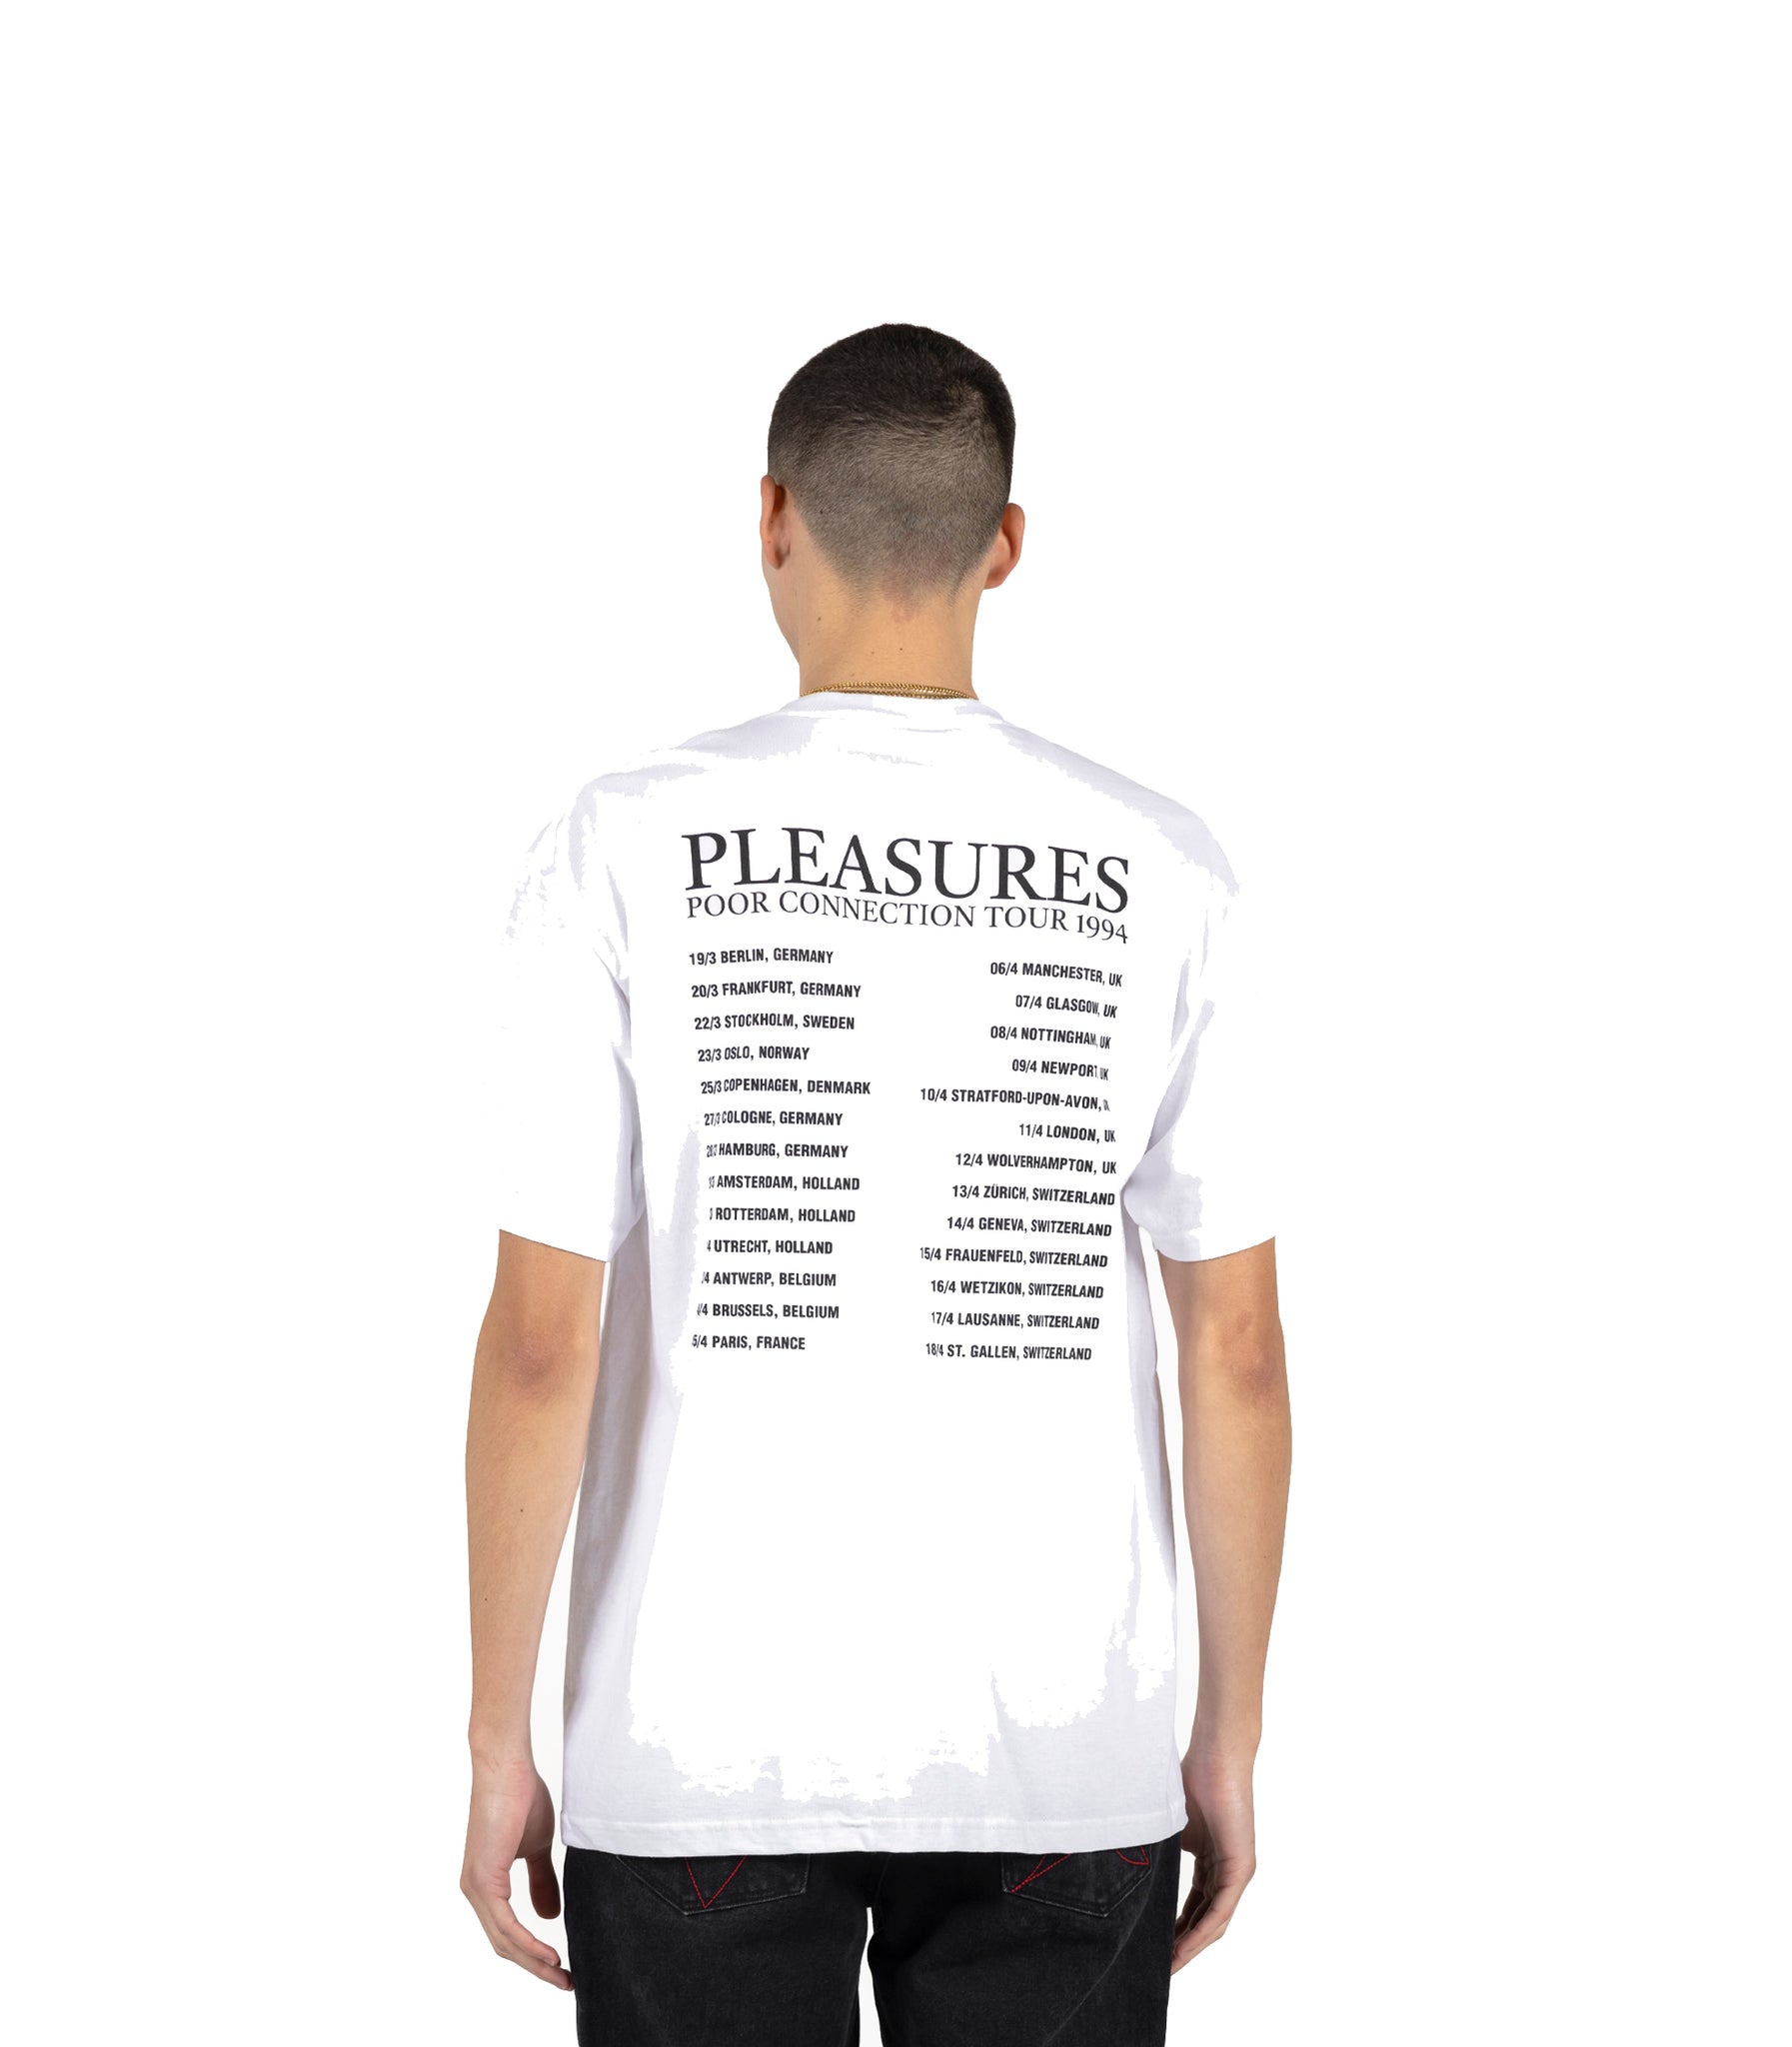 Pleasures Poor Connection T-Shirt